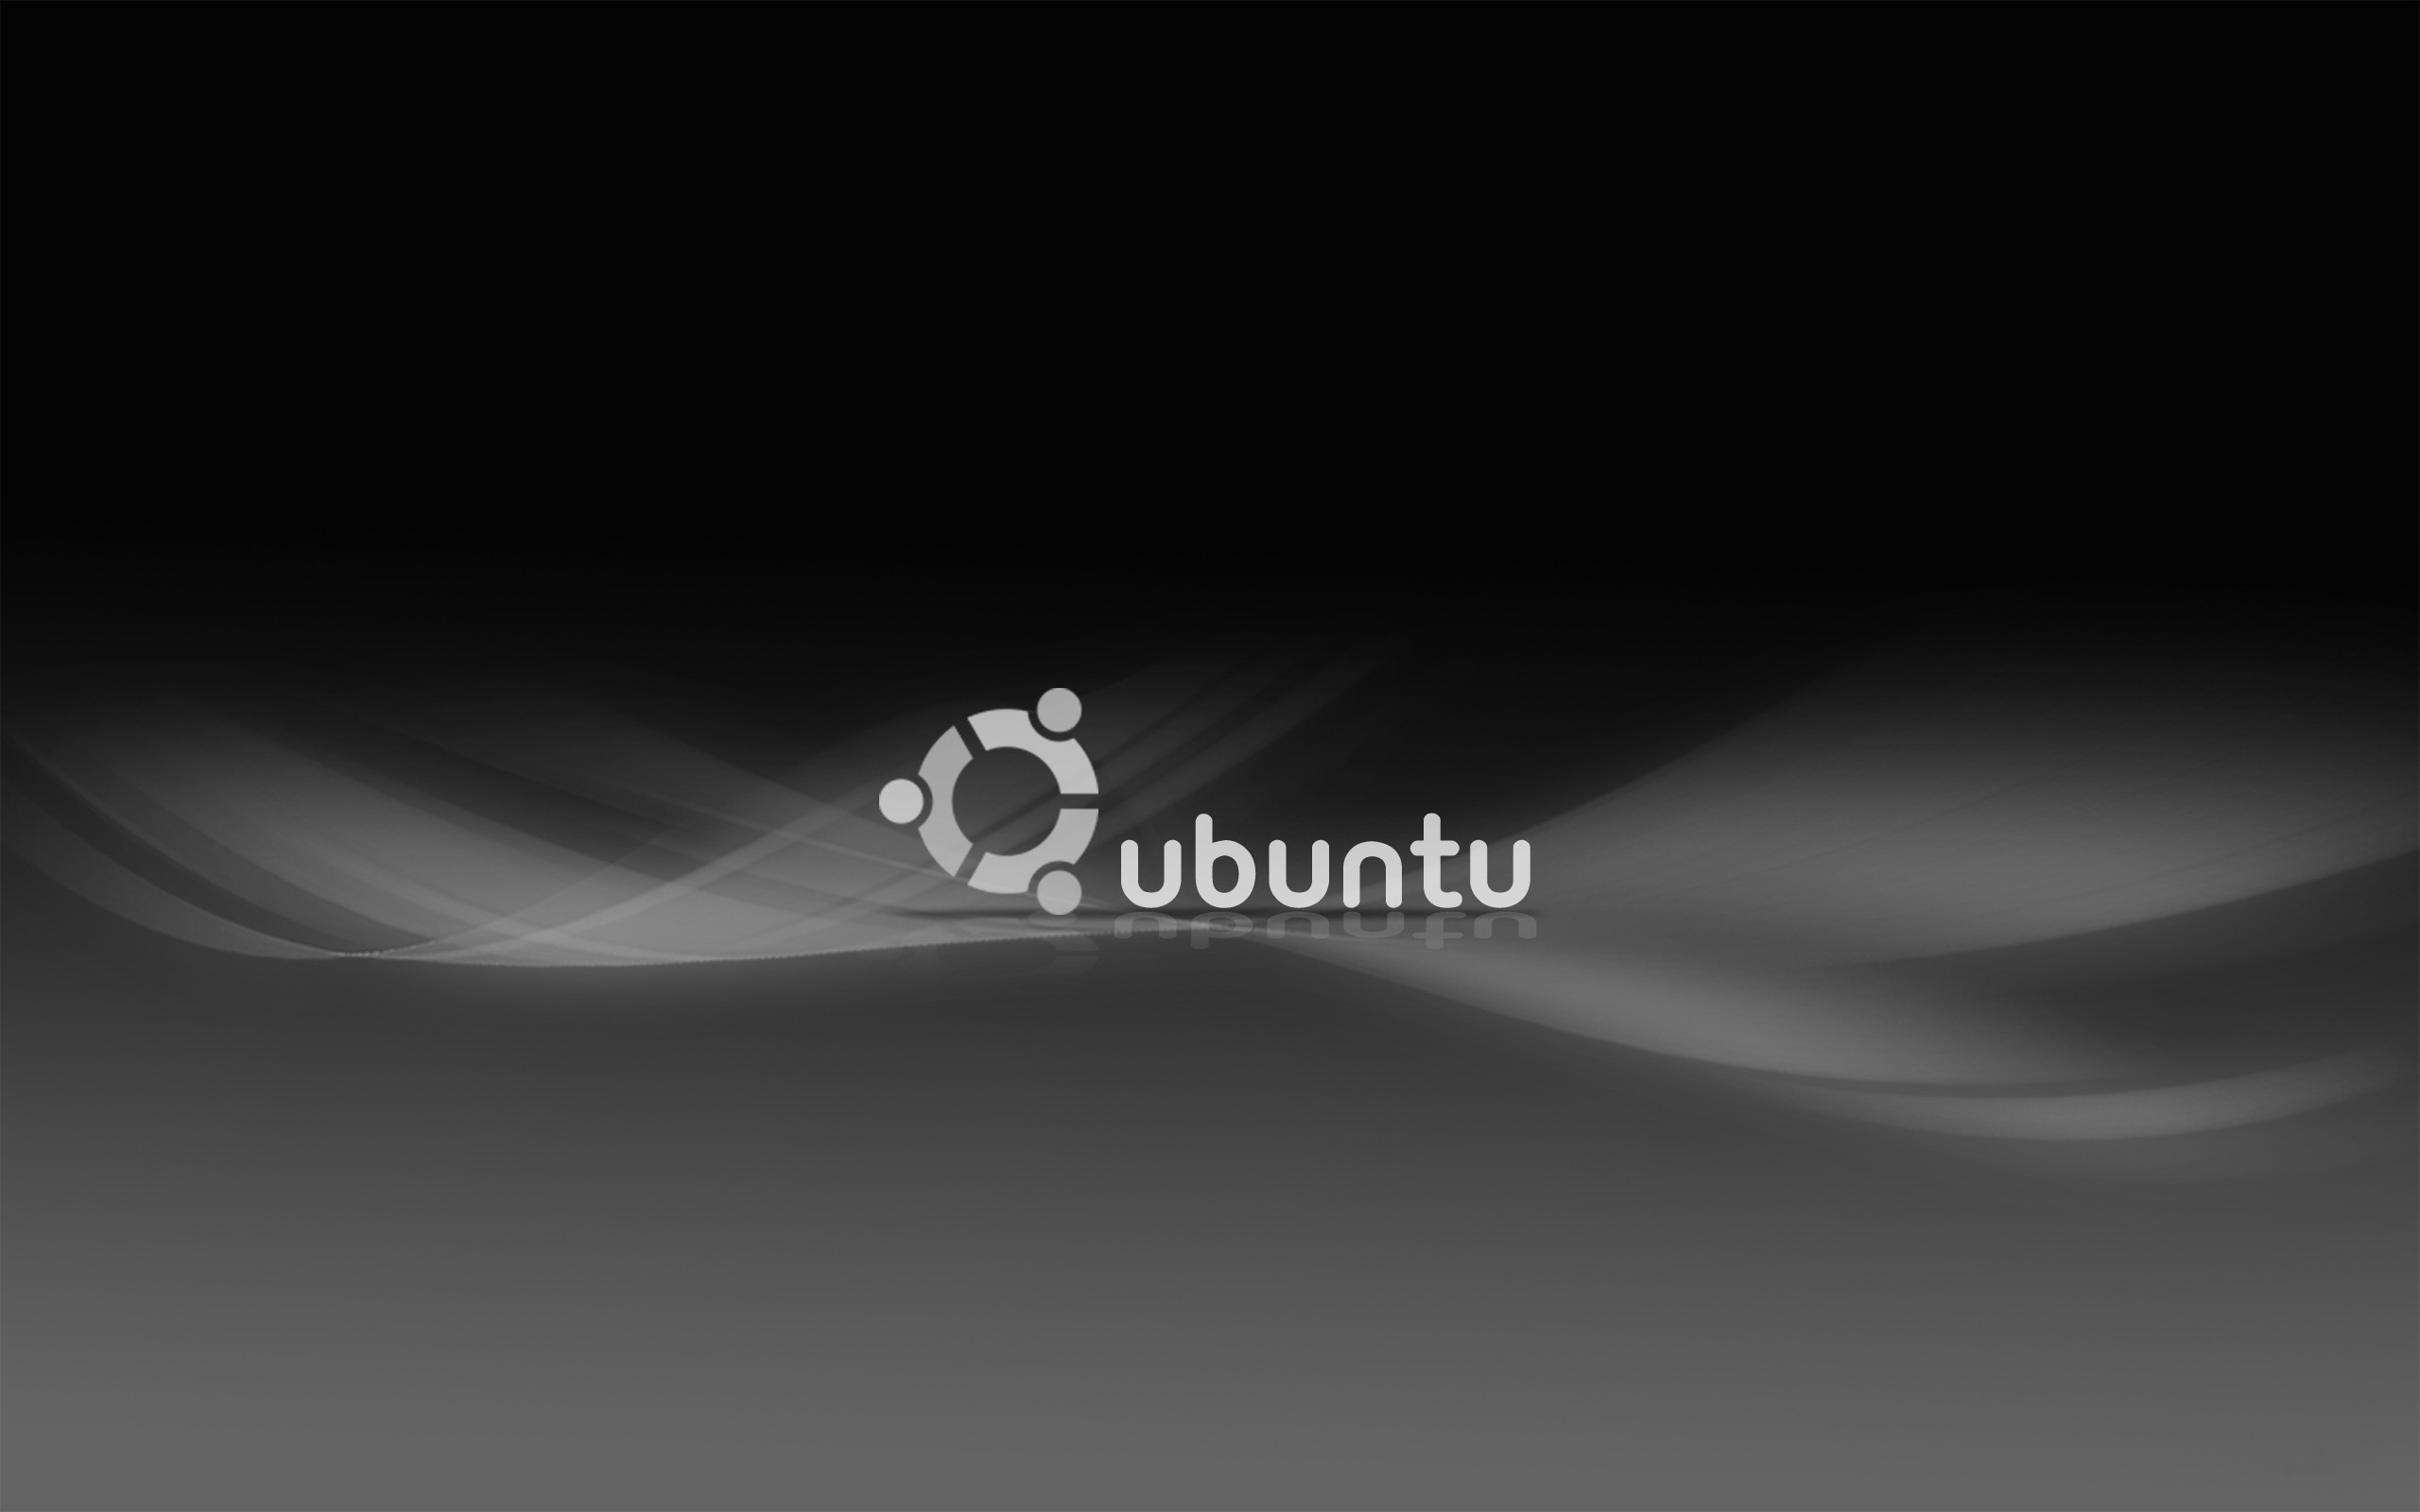 2560x1600 ... 45 Top Selection of Ubuntu Wallpaper Ubuntu Wallpapers ...